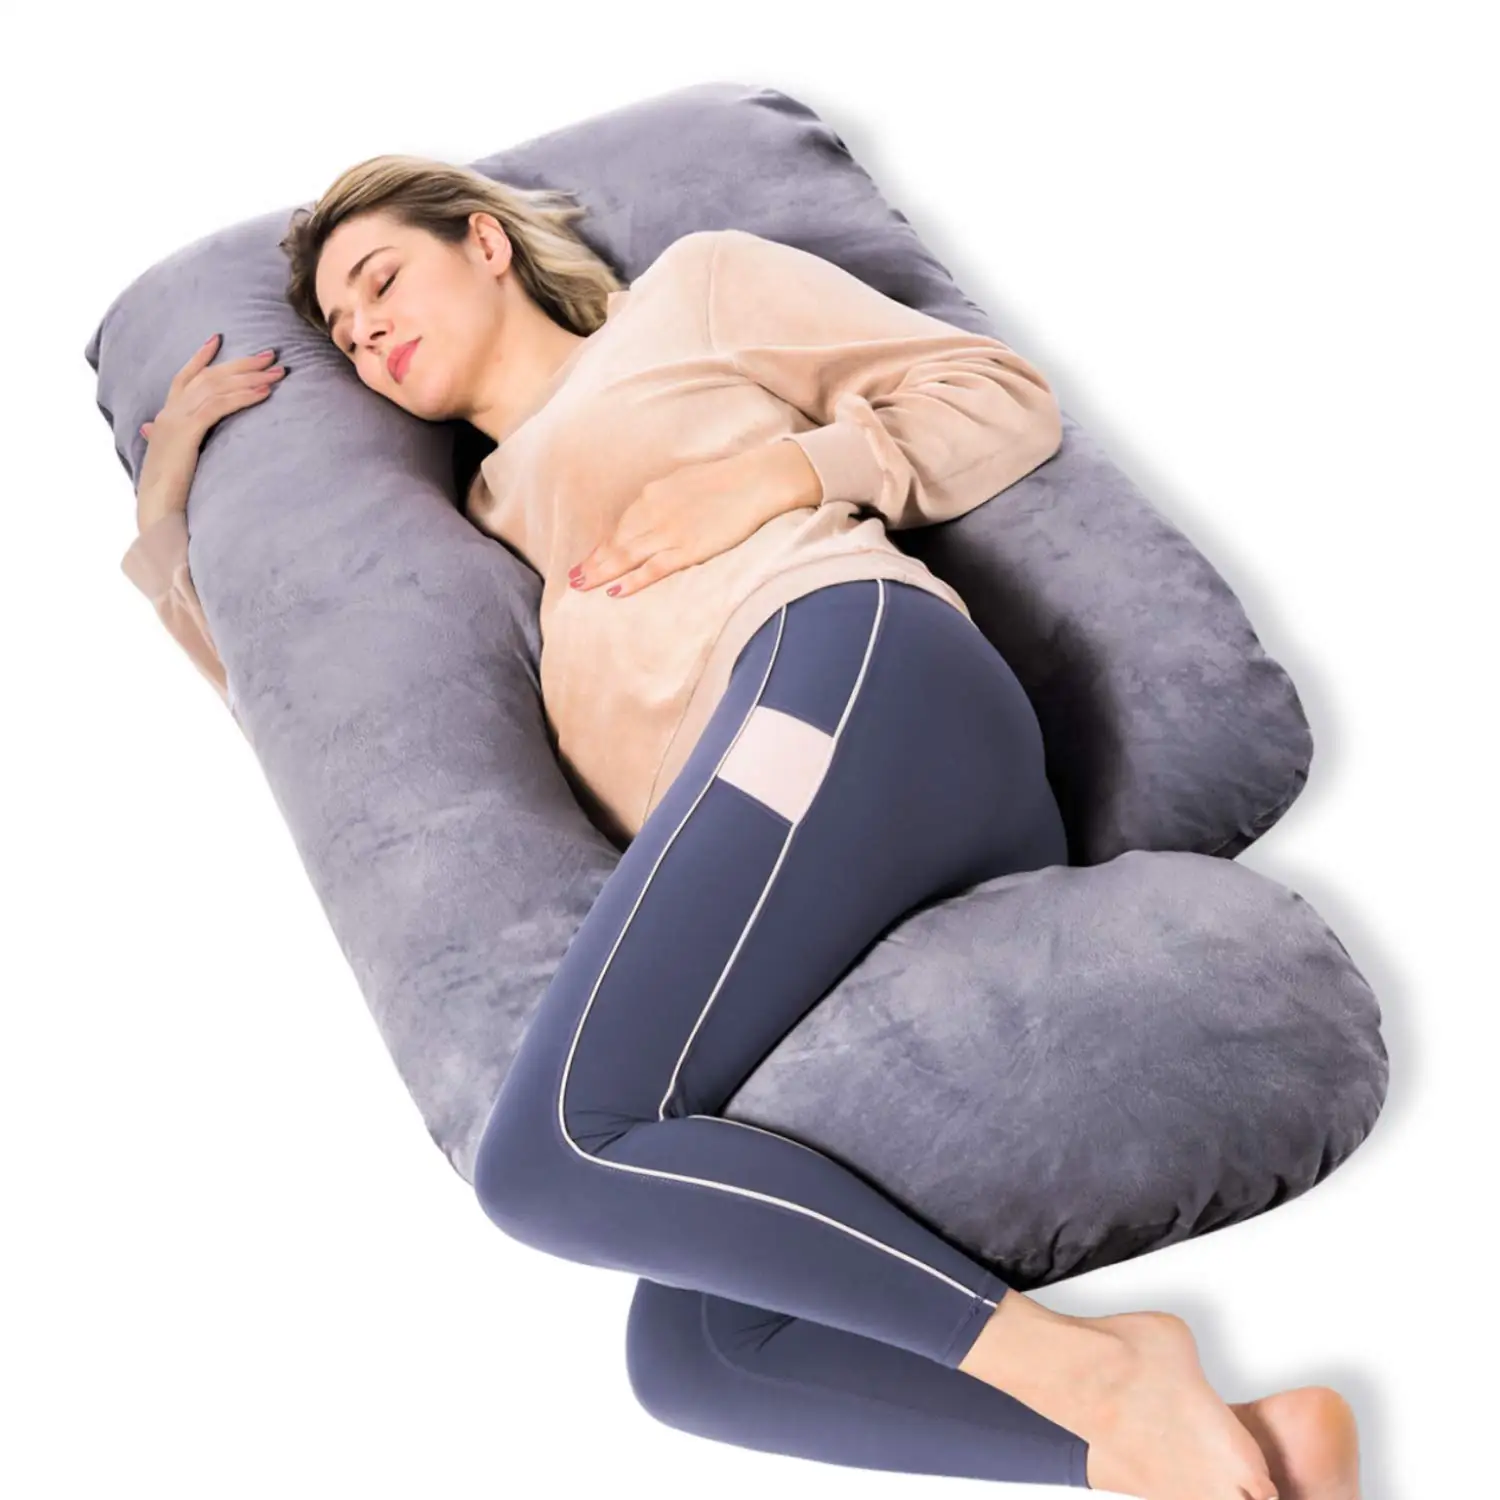 Pregnancy Pillows U Shaped Full Body Maternity Pillow with Removable Cover Pregnancy Pillows for Sleeping Side Sleepers Bedding